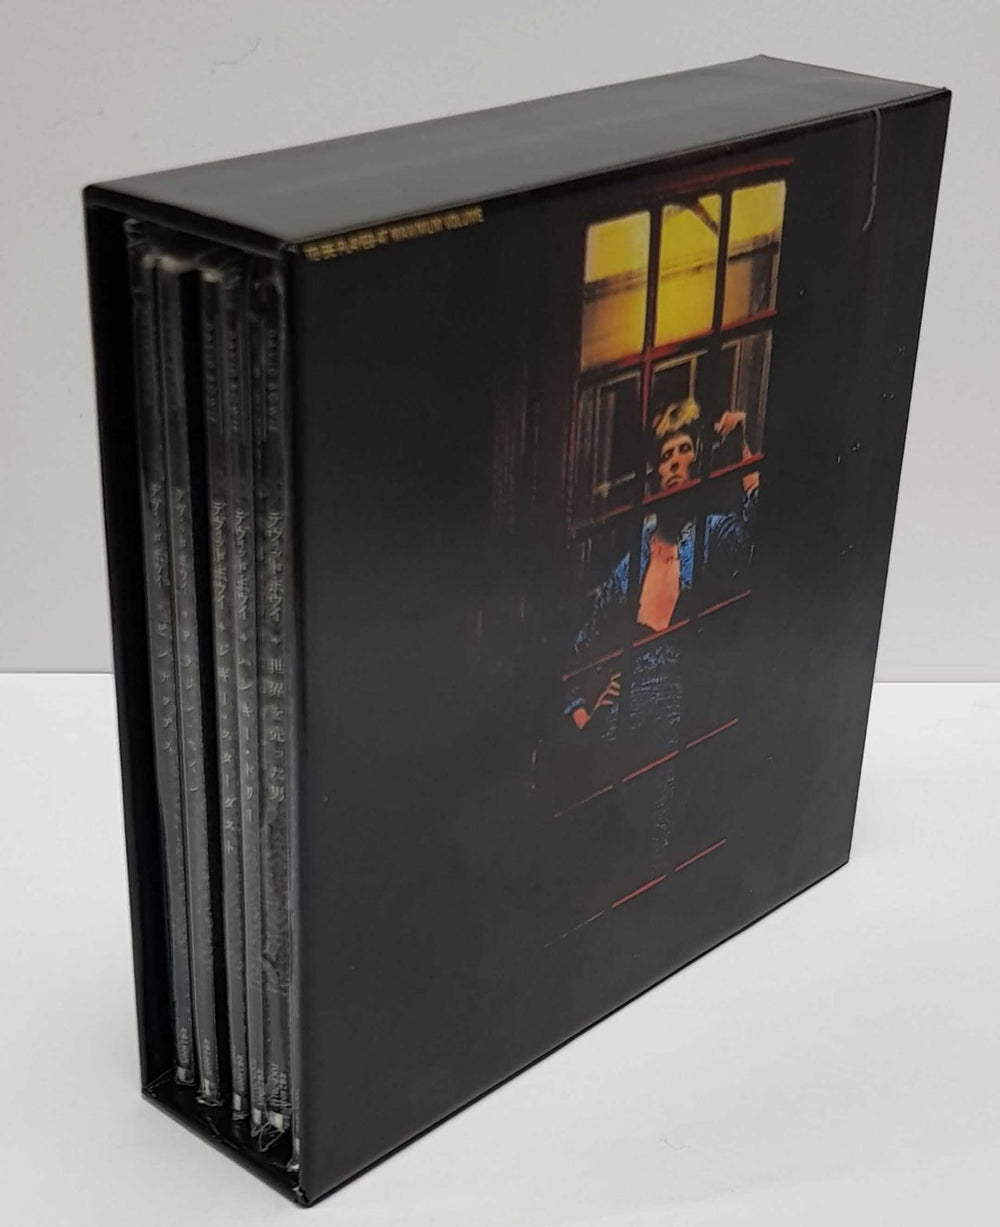 David Bowie Ziggy Stardust Box Set Japanese Cd album box set 